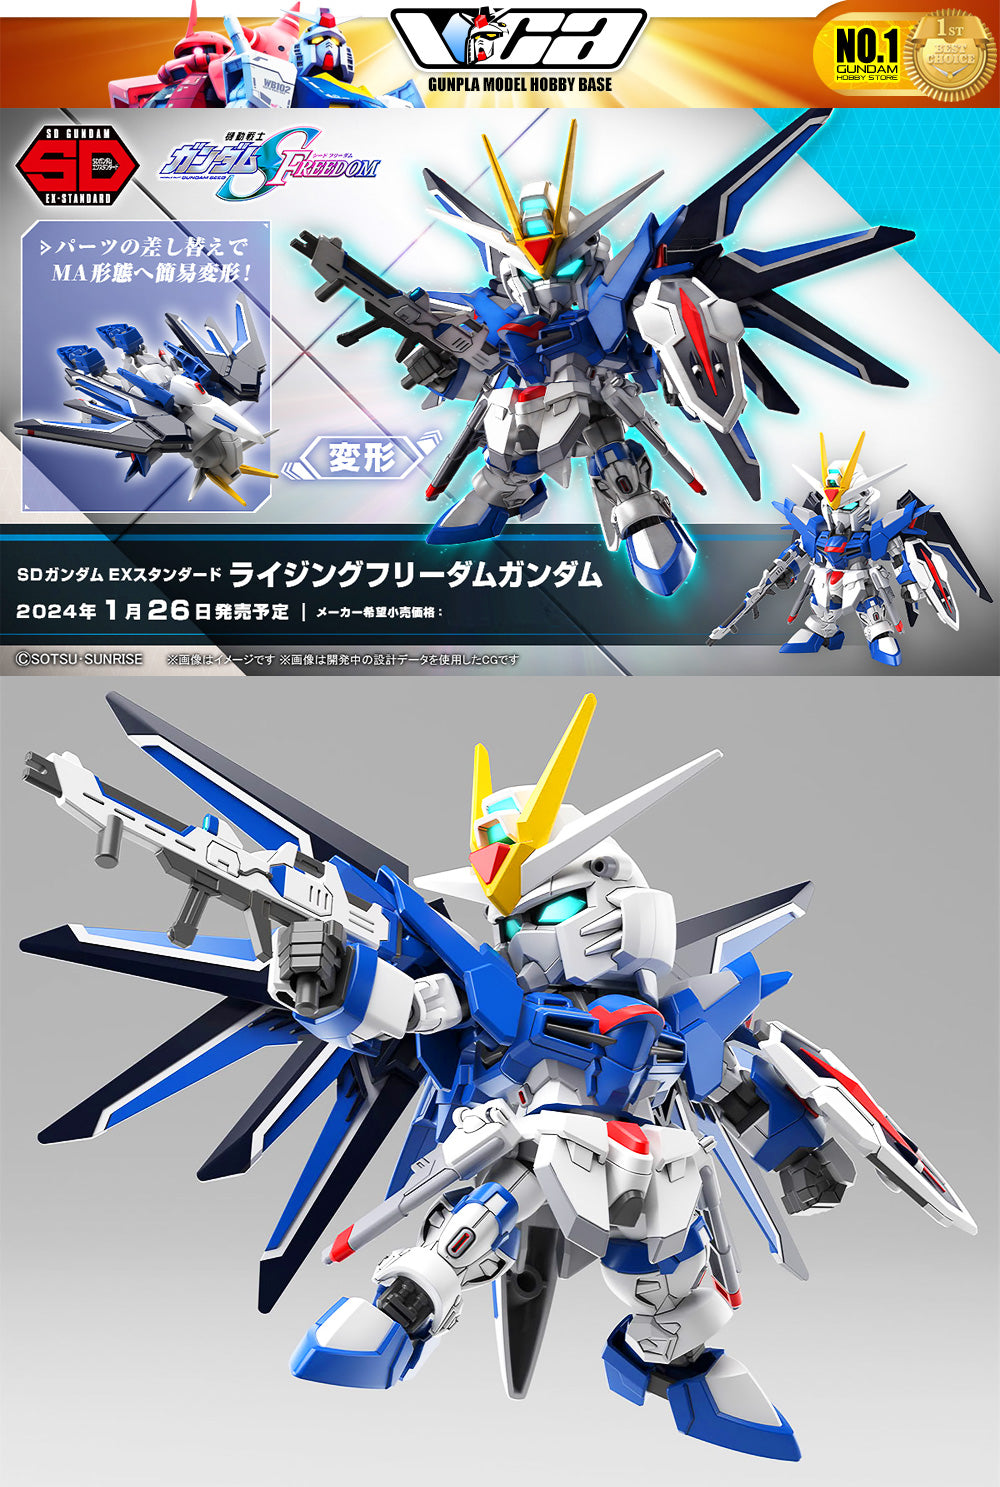 Bandai Gunpla SD Ex Standard SDEX Rising Freedom Gundam Plastic Model Action Toy Kit VCA Singapore